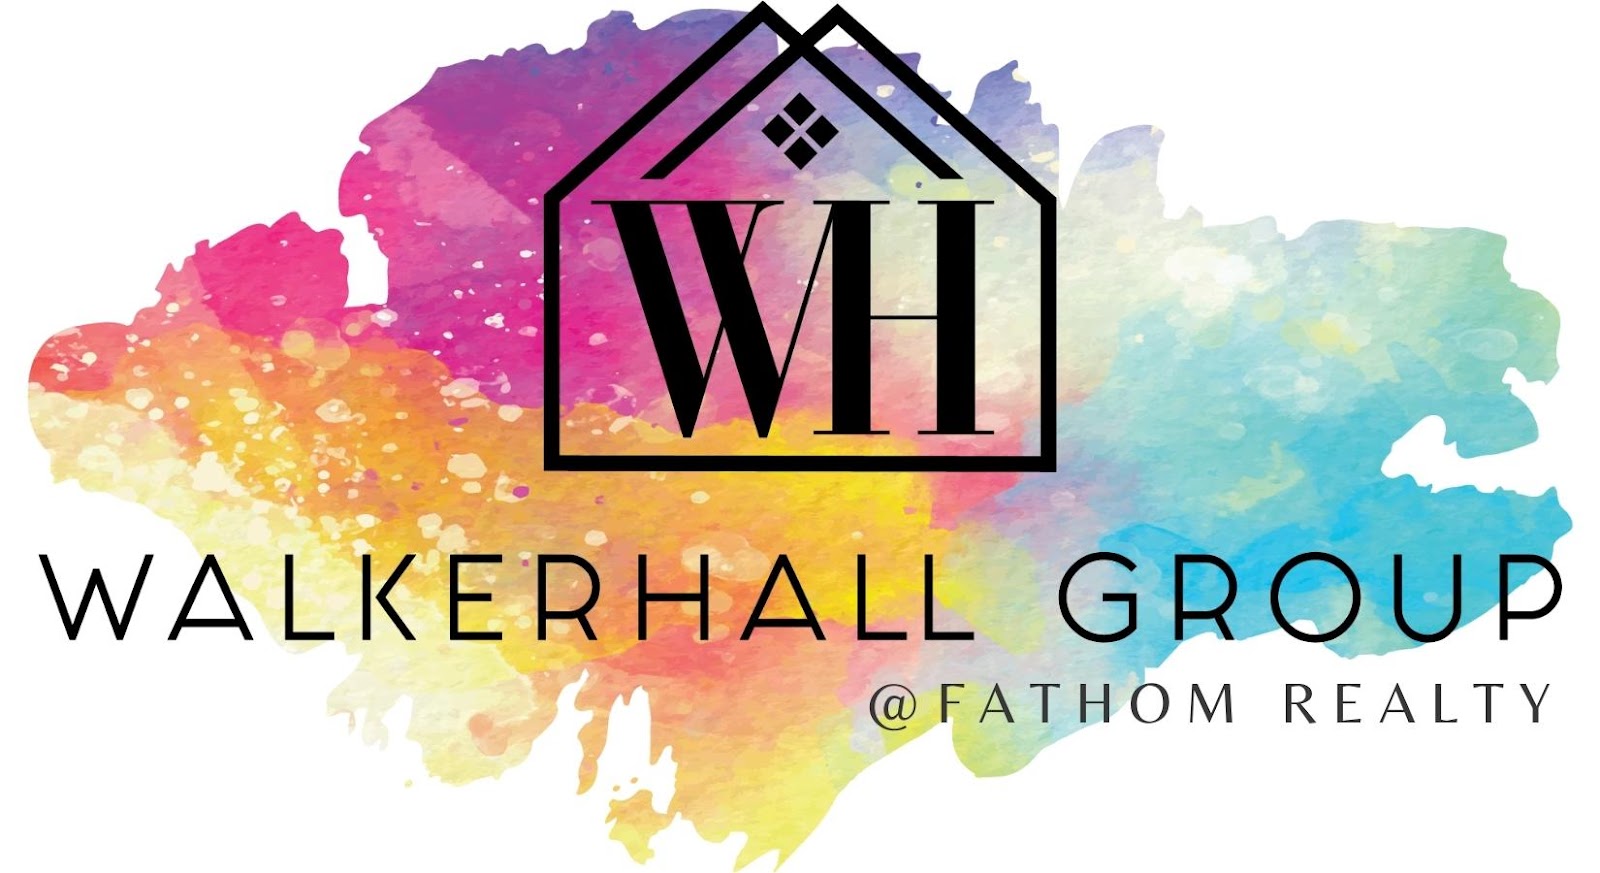 WalkerHall Group